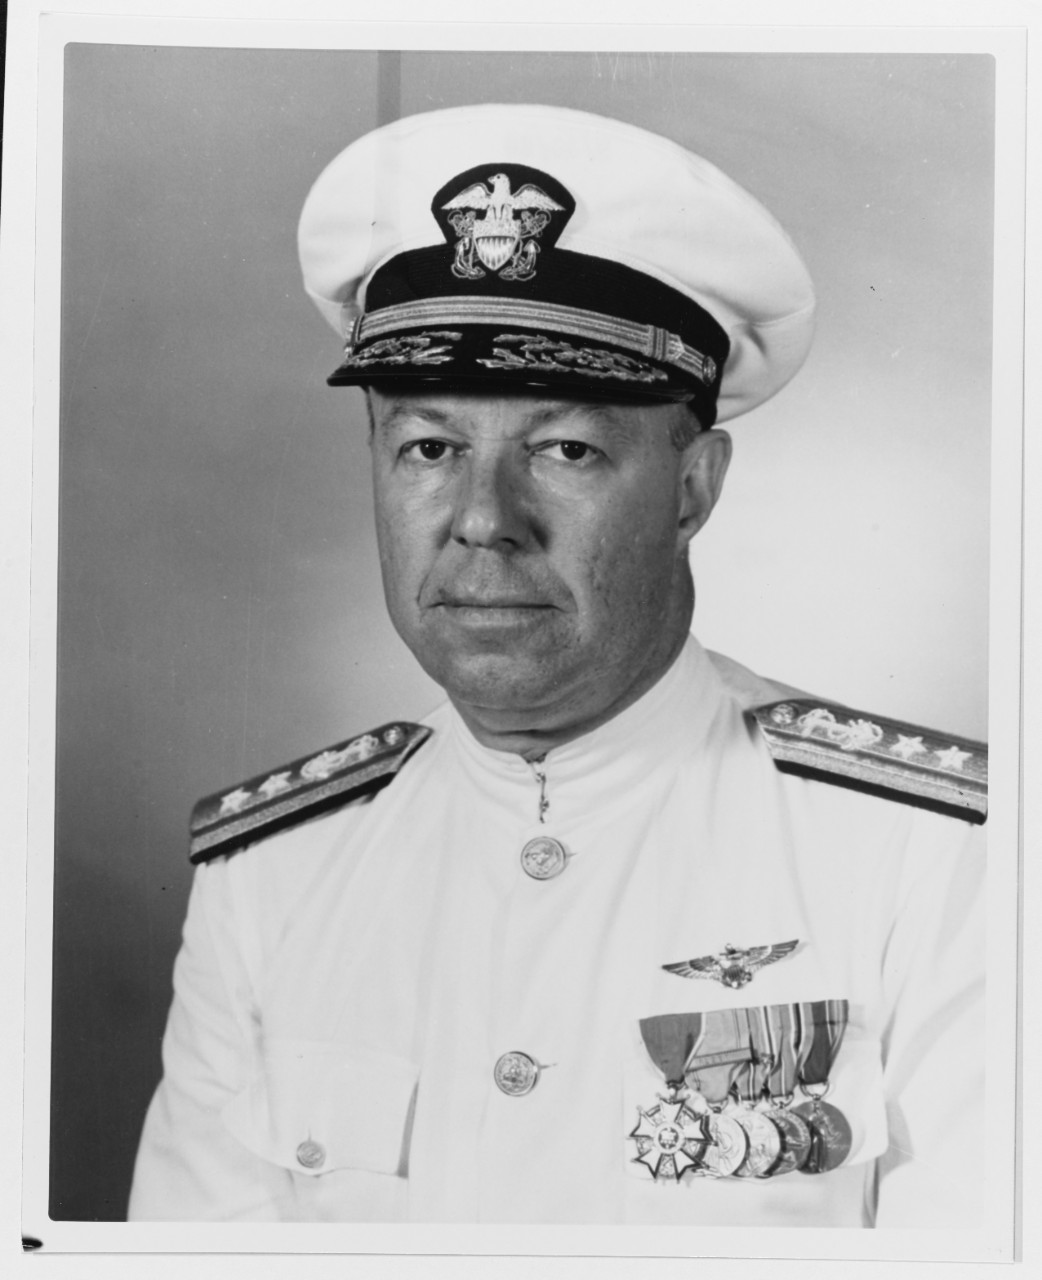 Rear Admiral Emerson Evans Fawkes, USN